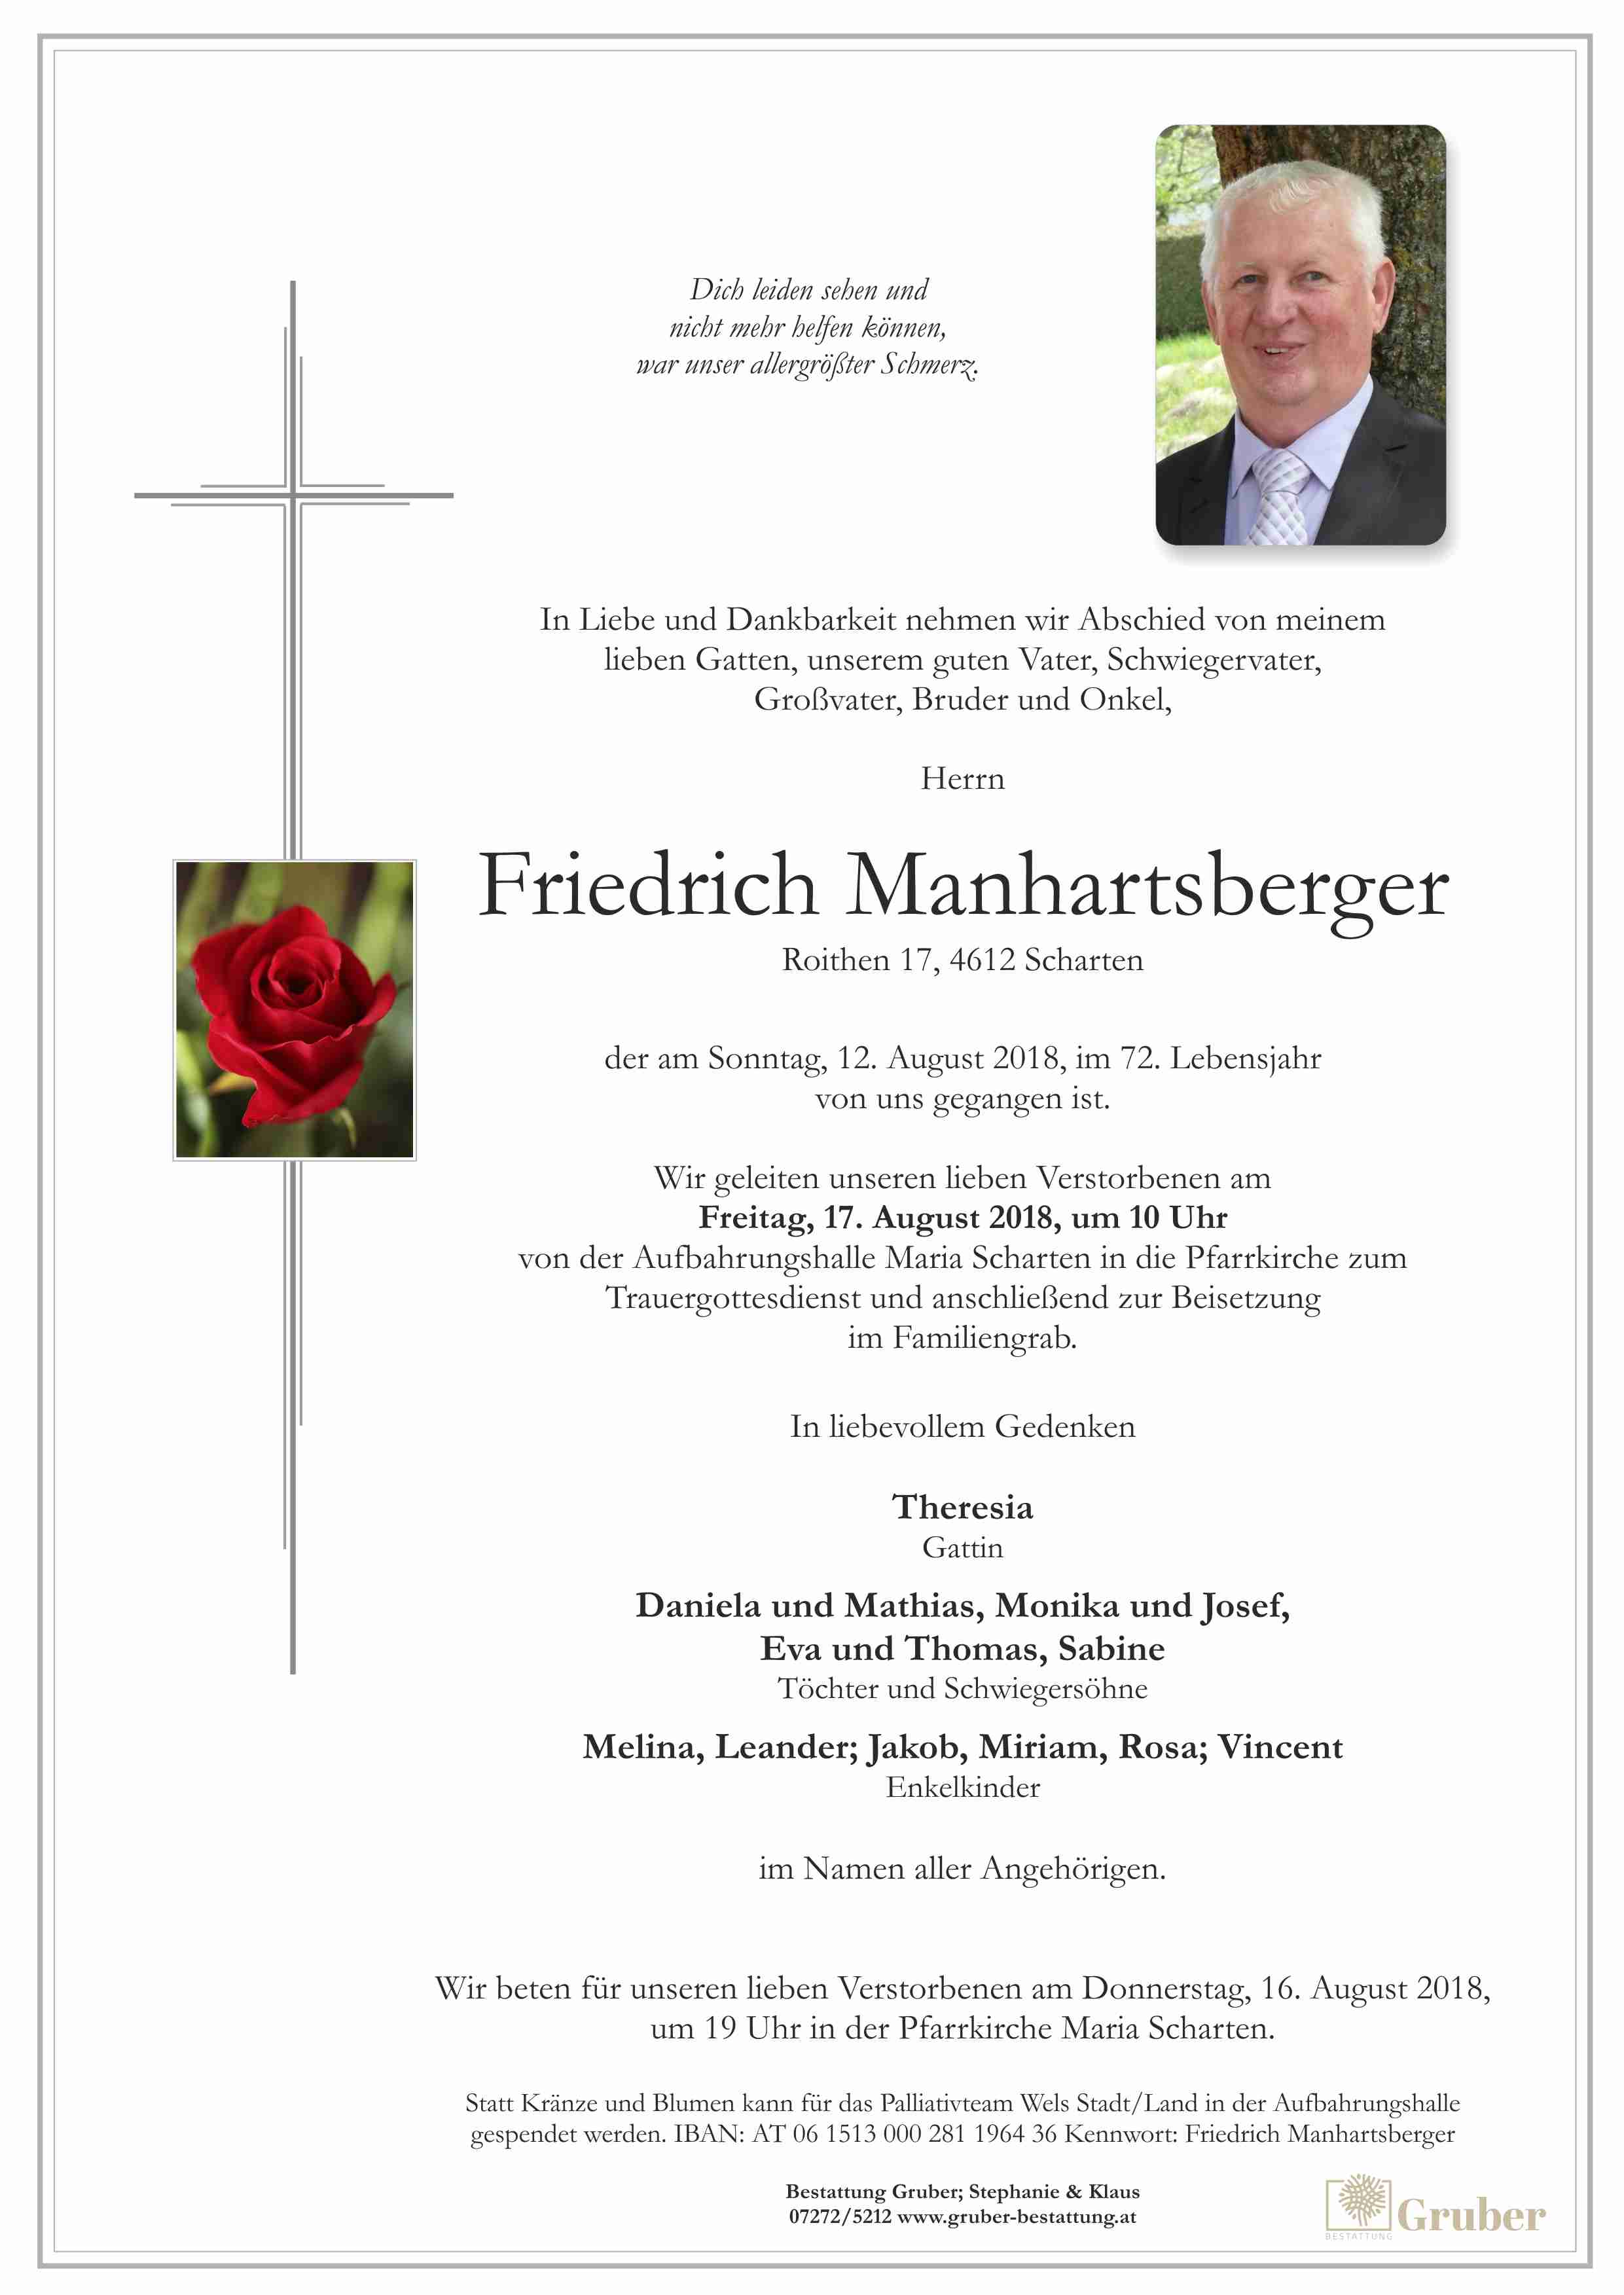 Friedrich Manhartsberger (Scharten Kath.)